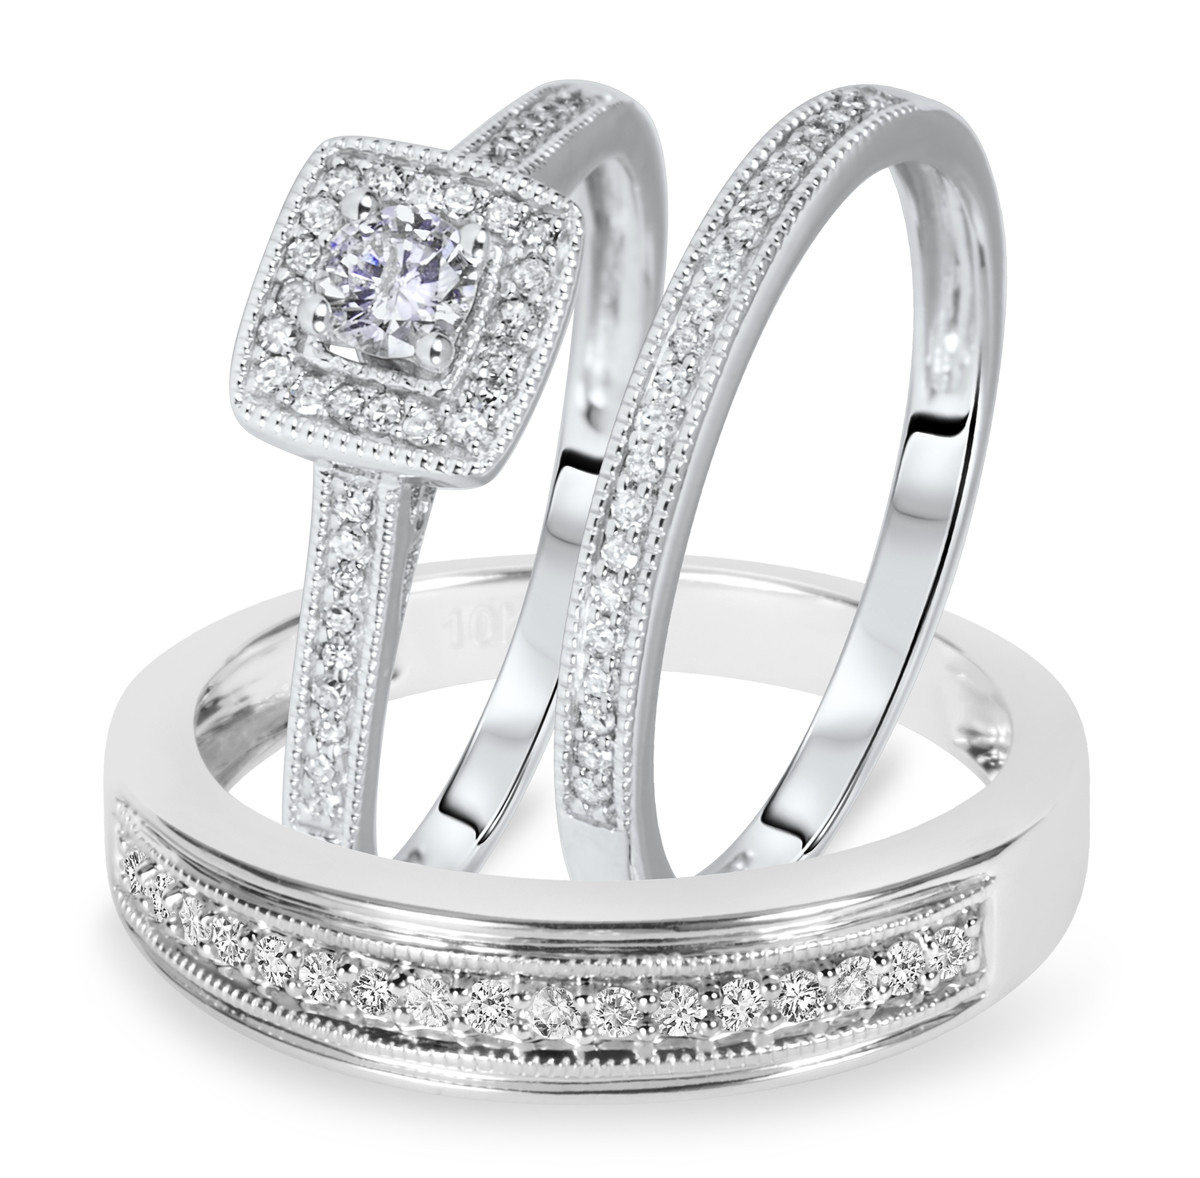 Matching Wedding Ring Sets
 1 2 Carat T W Round Cut Diamond Matching Trio Wedding